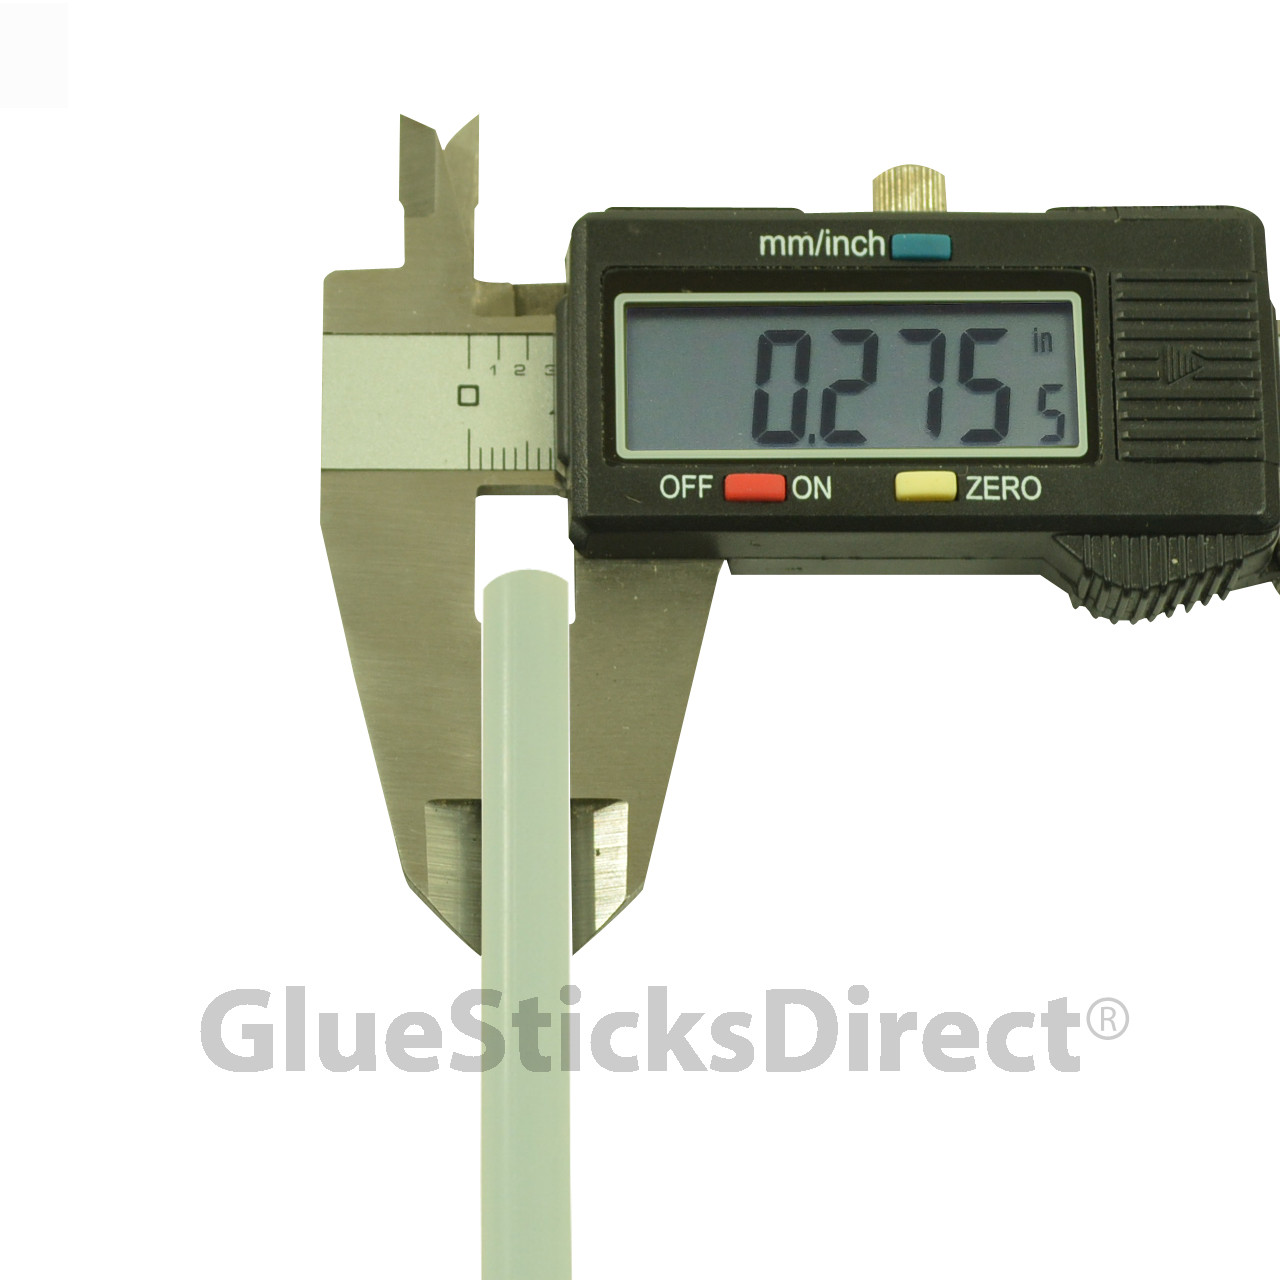 GlueSticksDirect Wholesale® Hot n Cool Melt Glue Sticks Mini X 10" 25 lbs